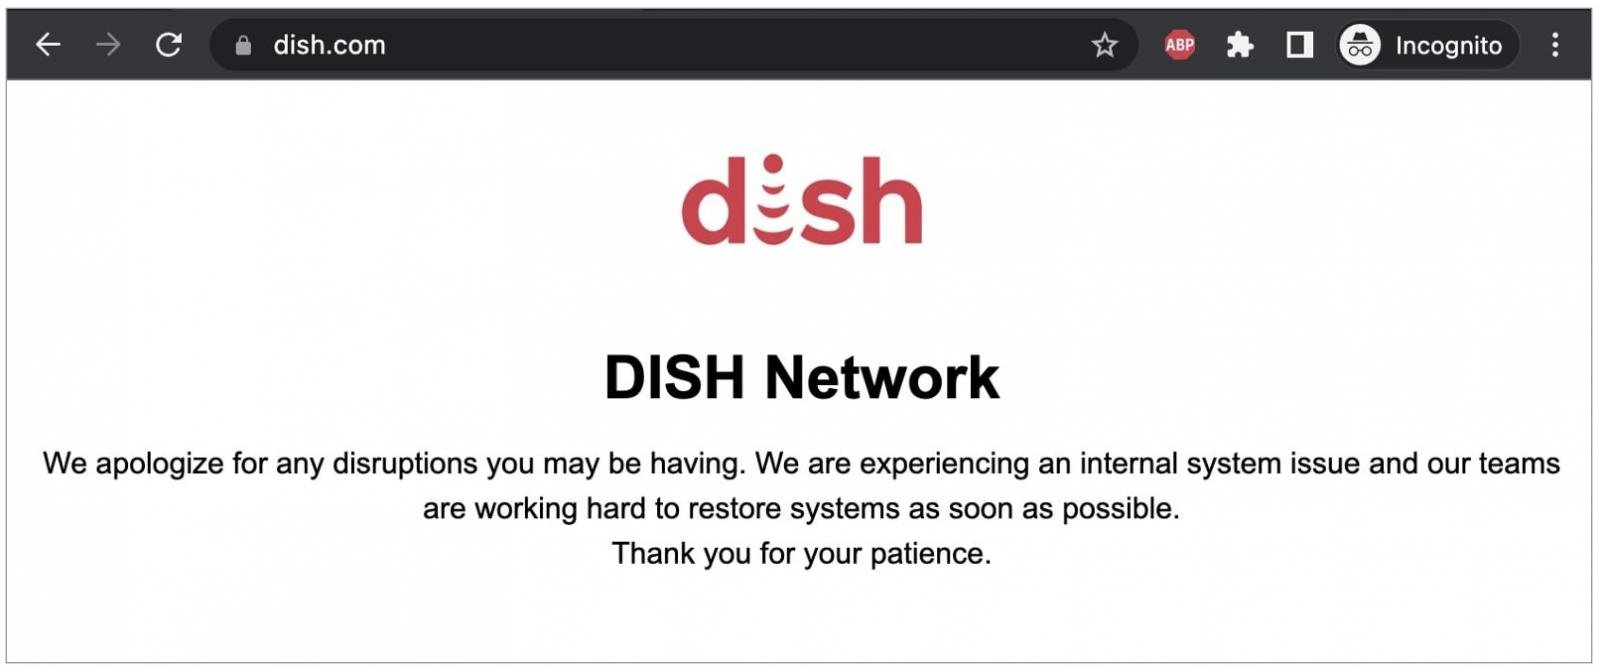 Dish.com website offline amid 'internal system issue' 